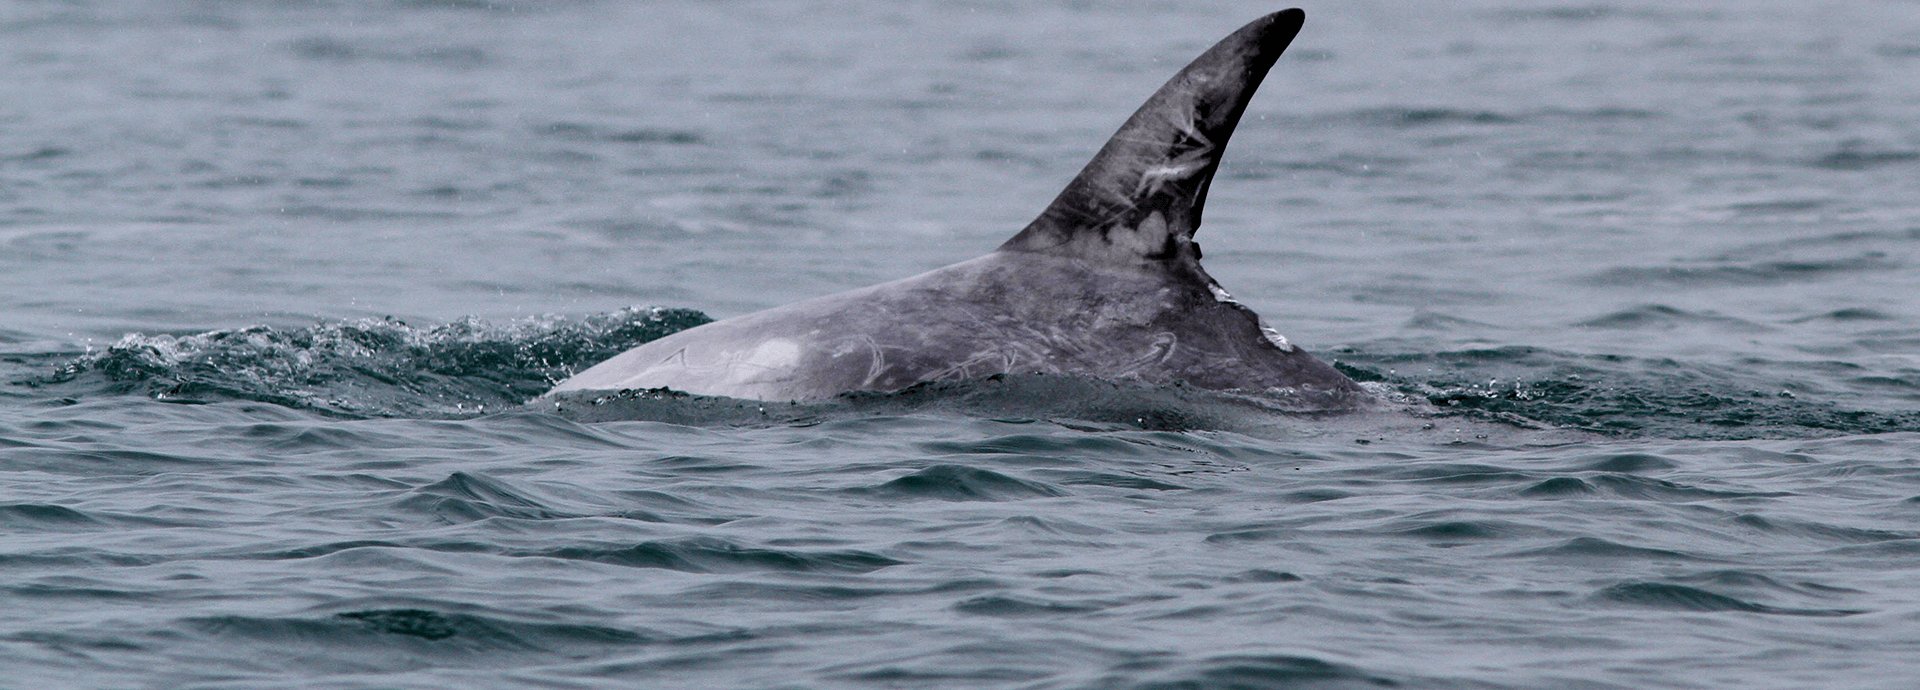 Dolphin cruise on Arabian Sea | Abercrombie & Kent